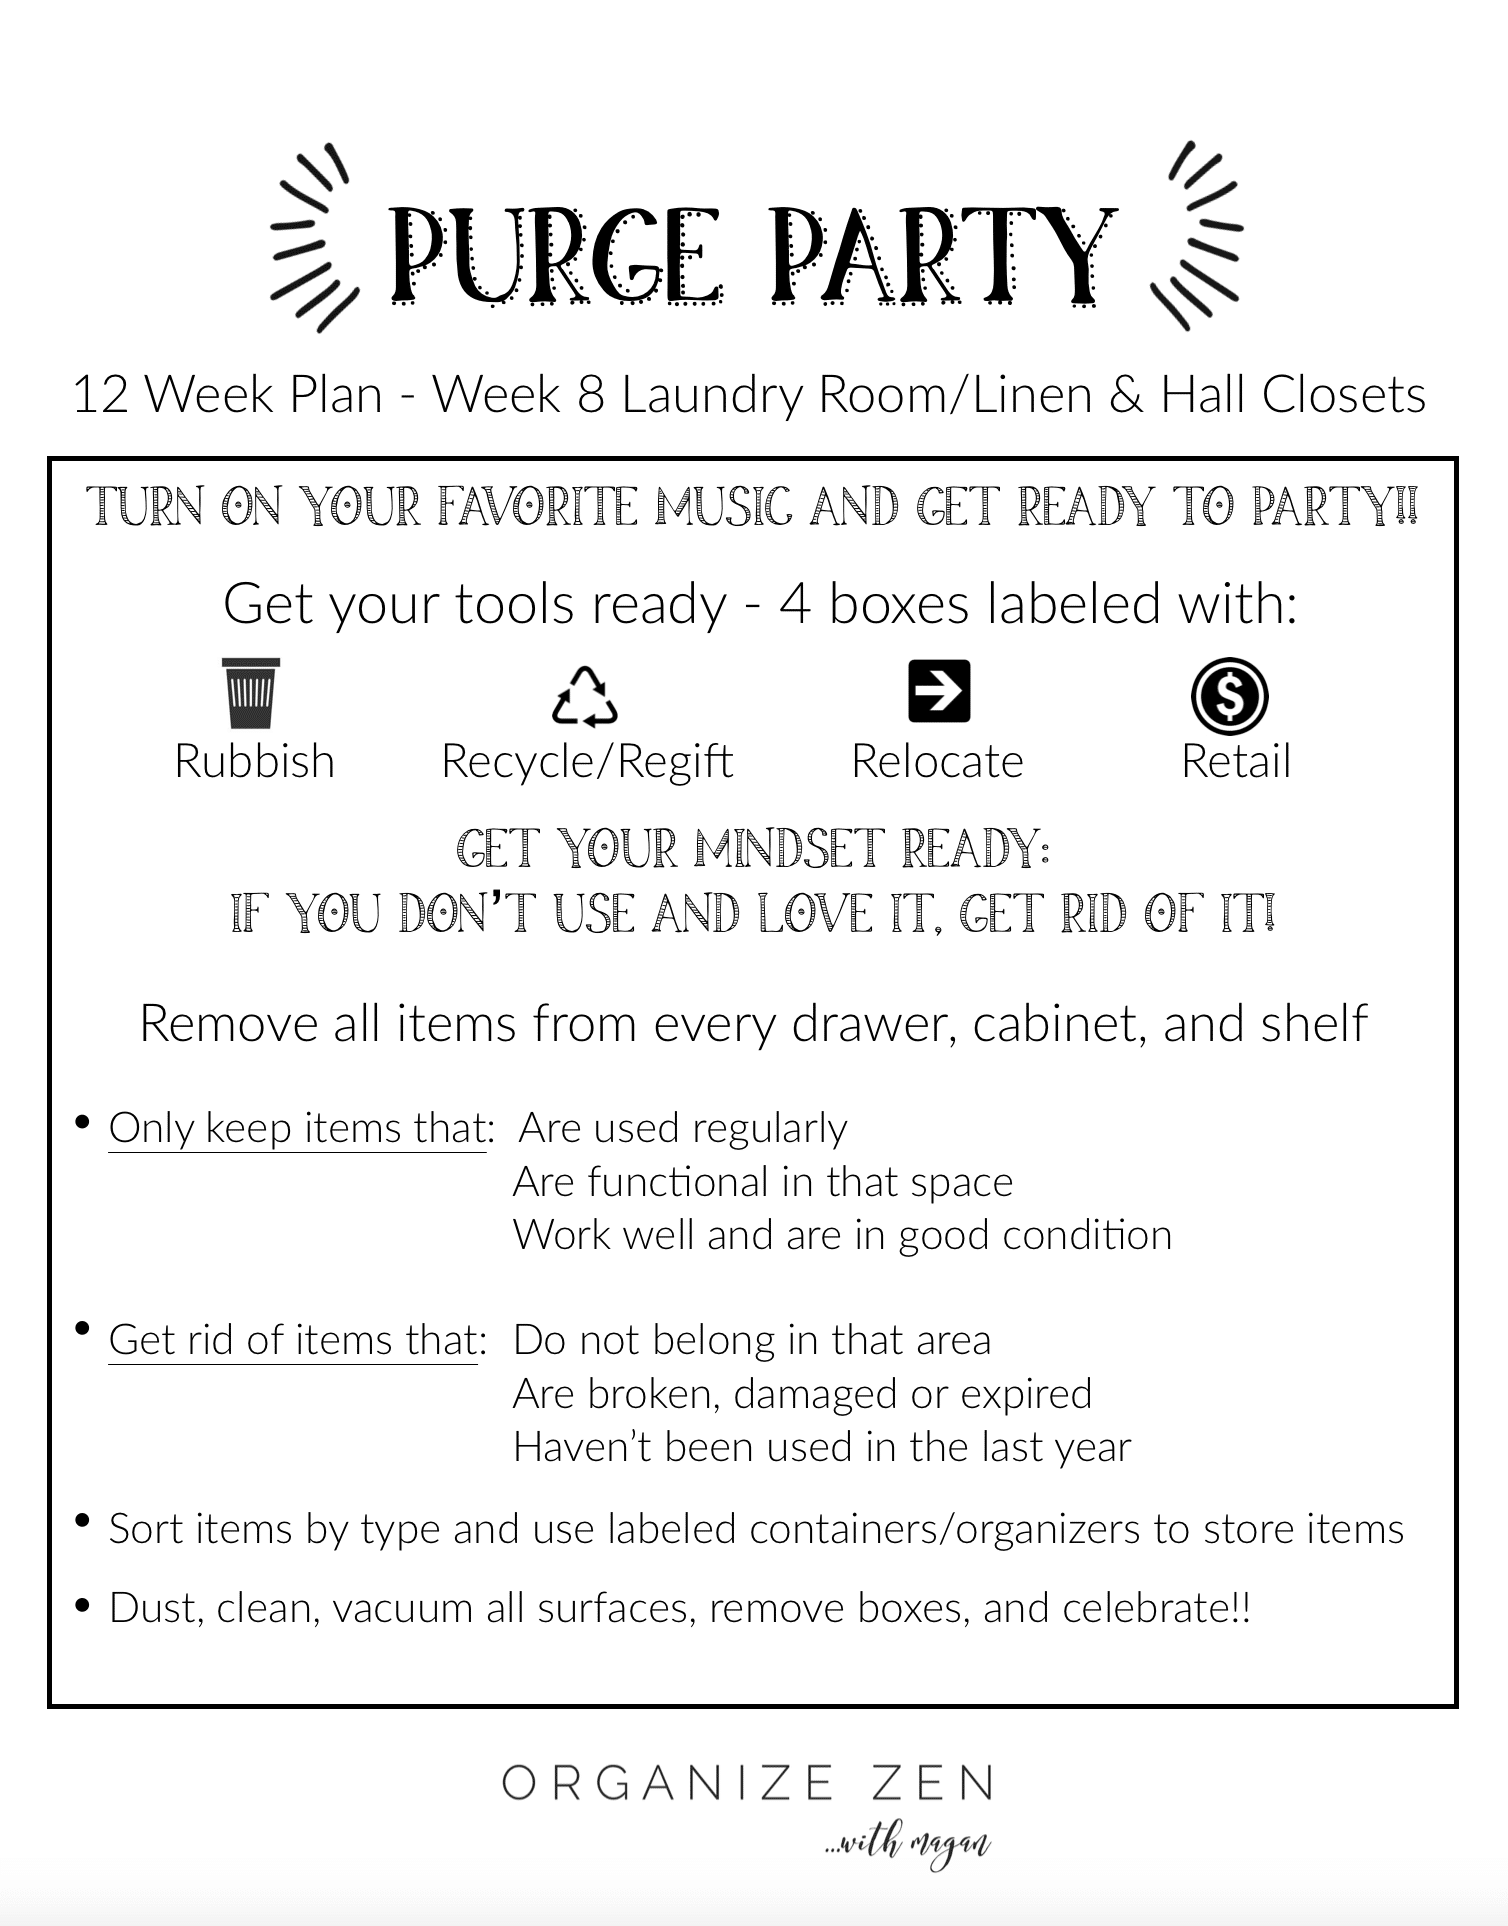 Purge Party Laundry Room Organization 